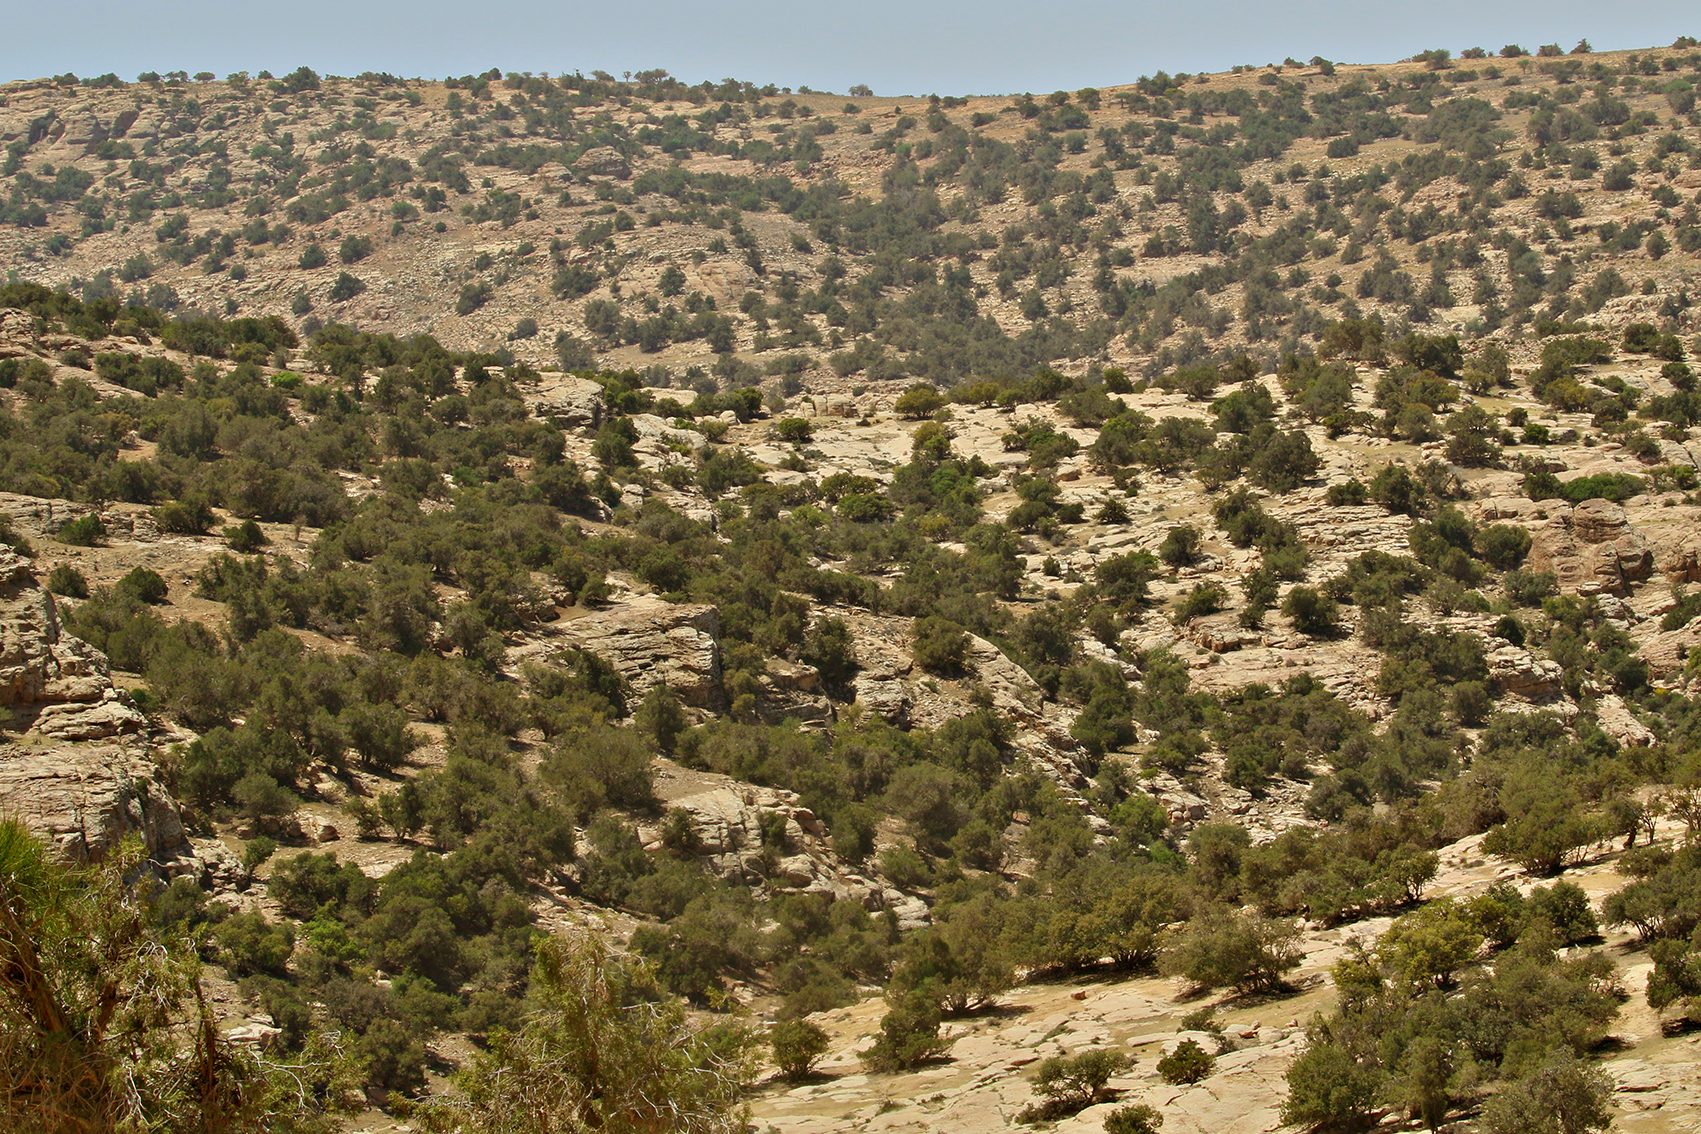 Syrian serin habitat